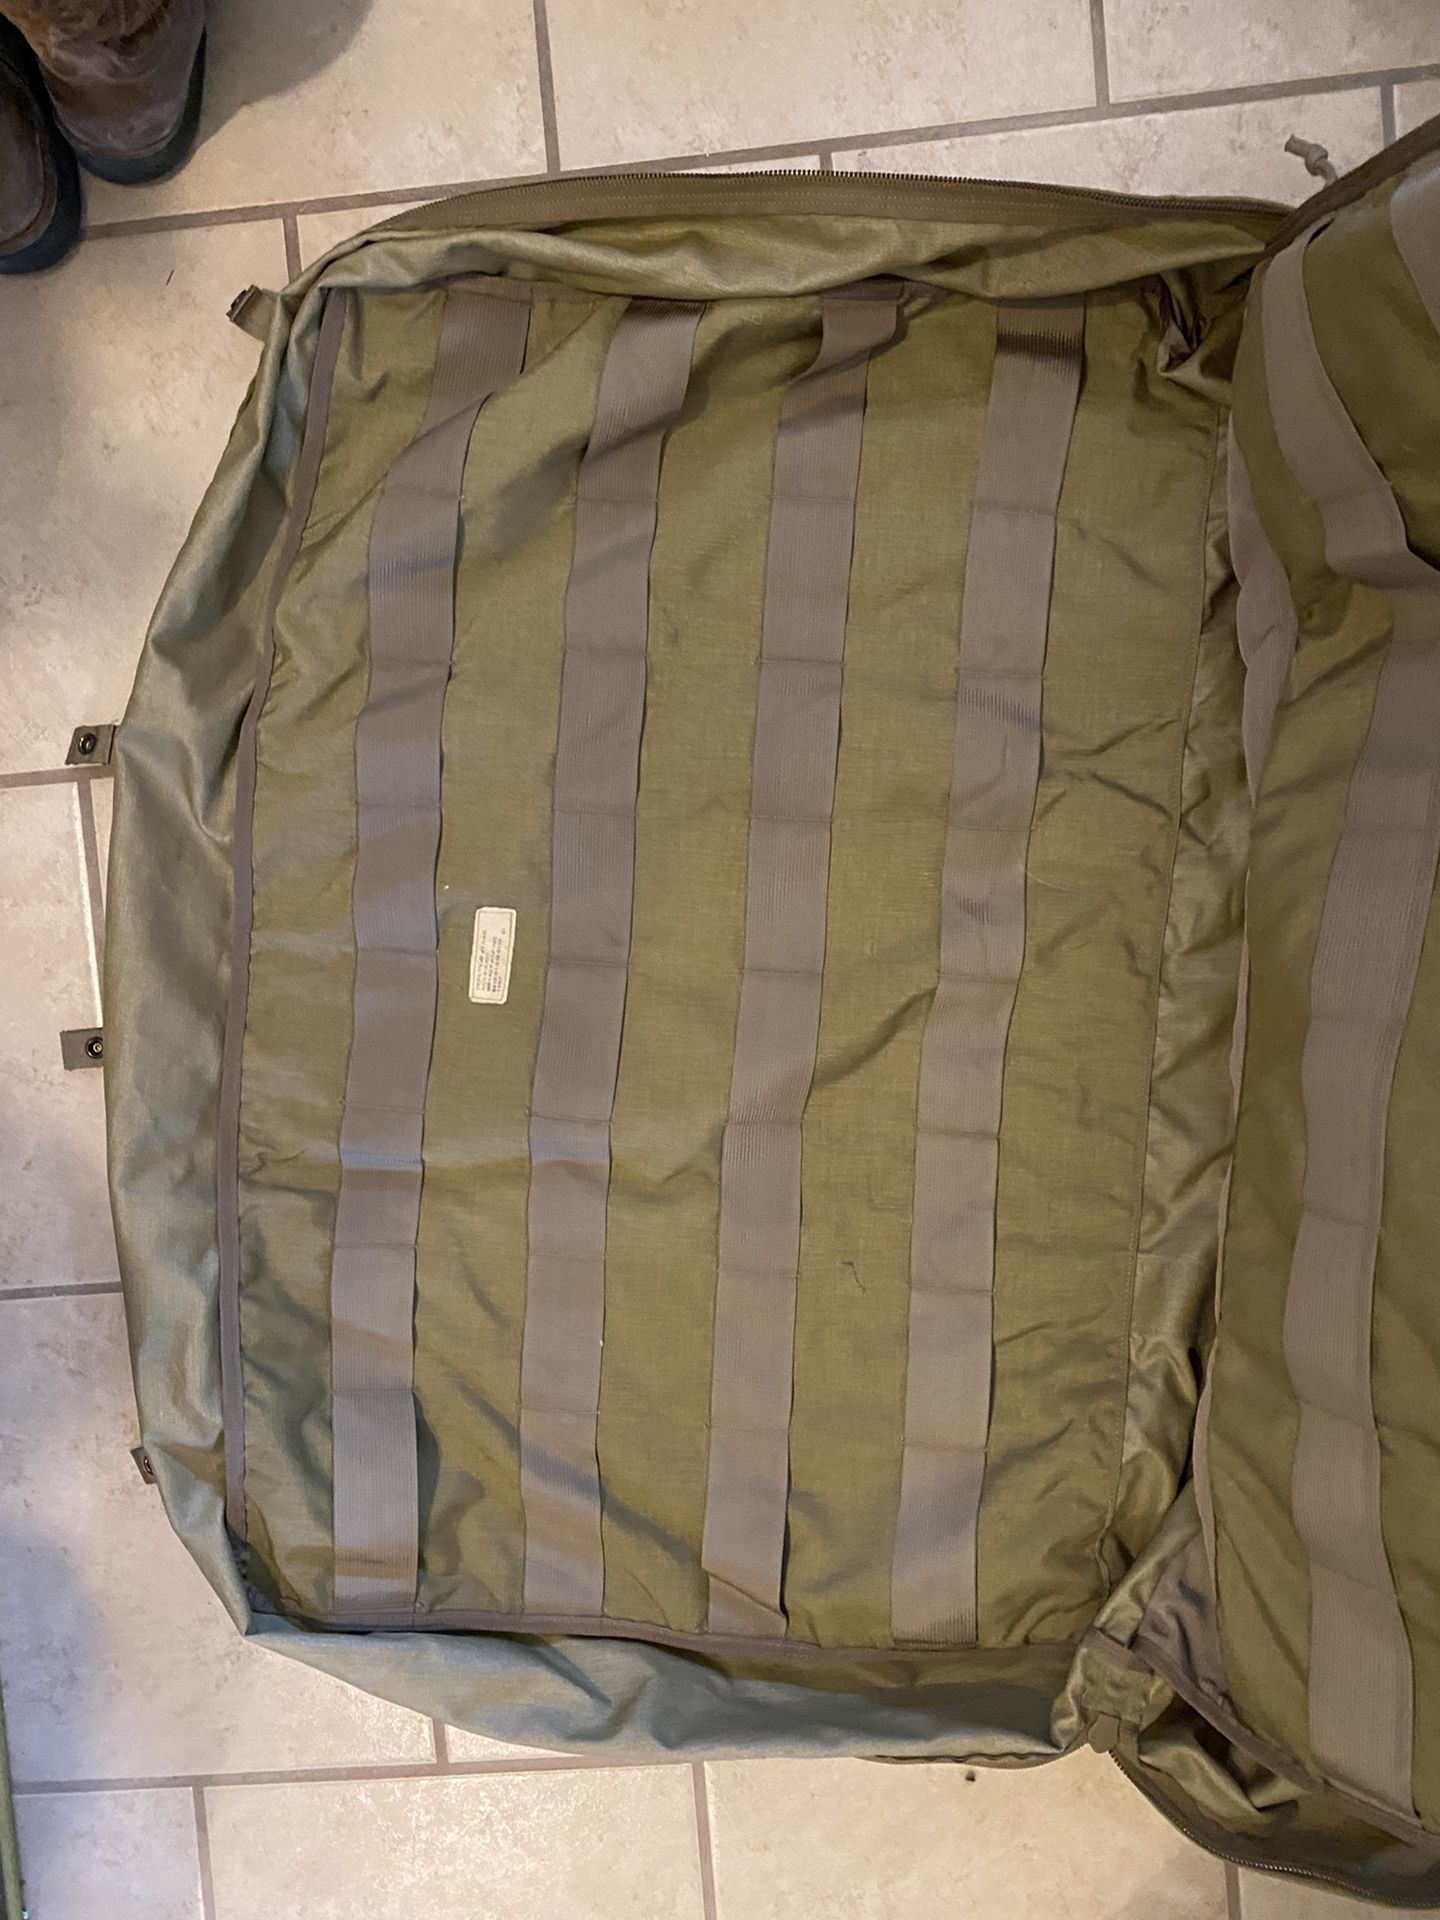 Military Gear Bag